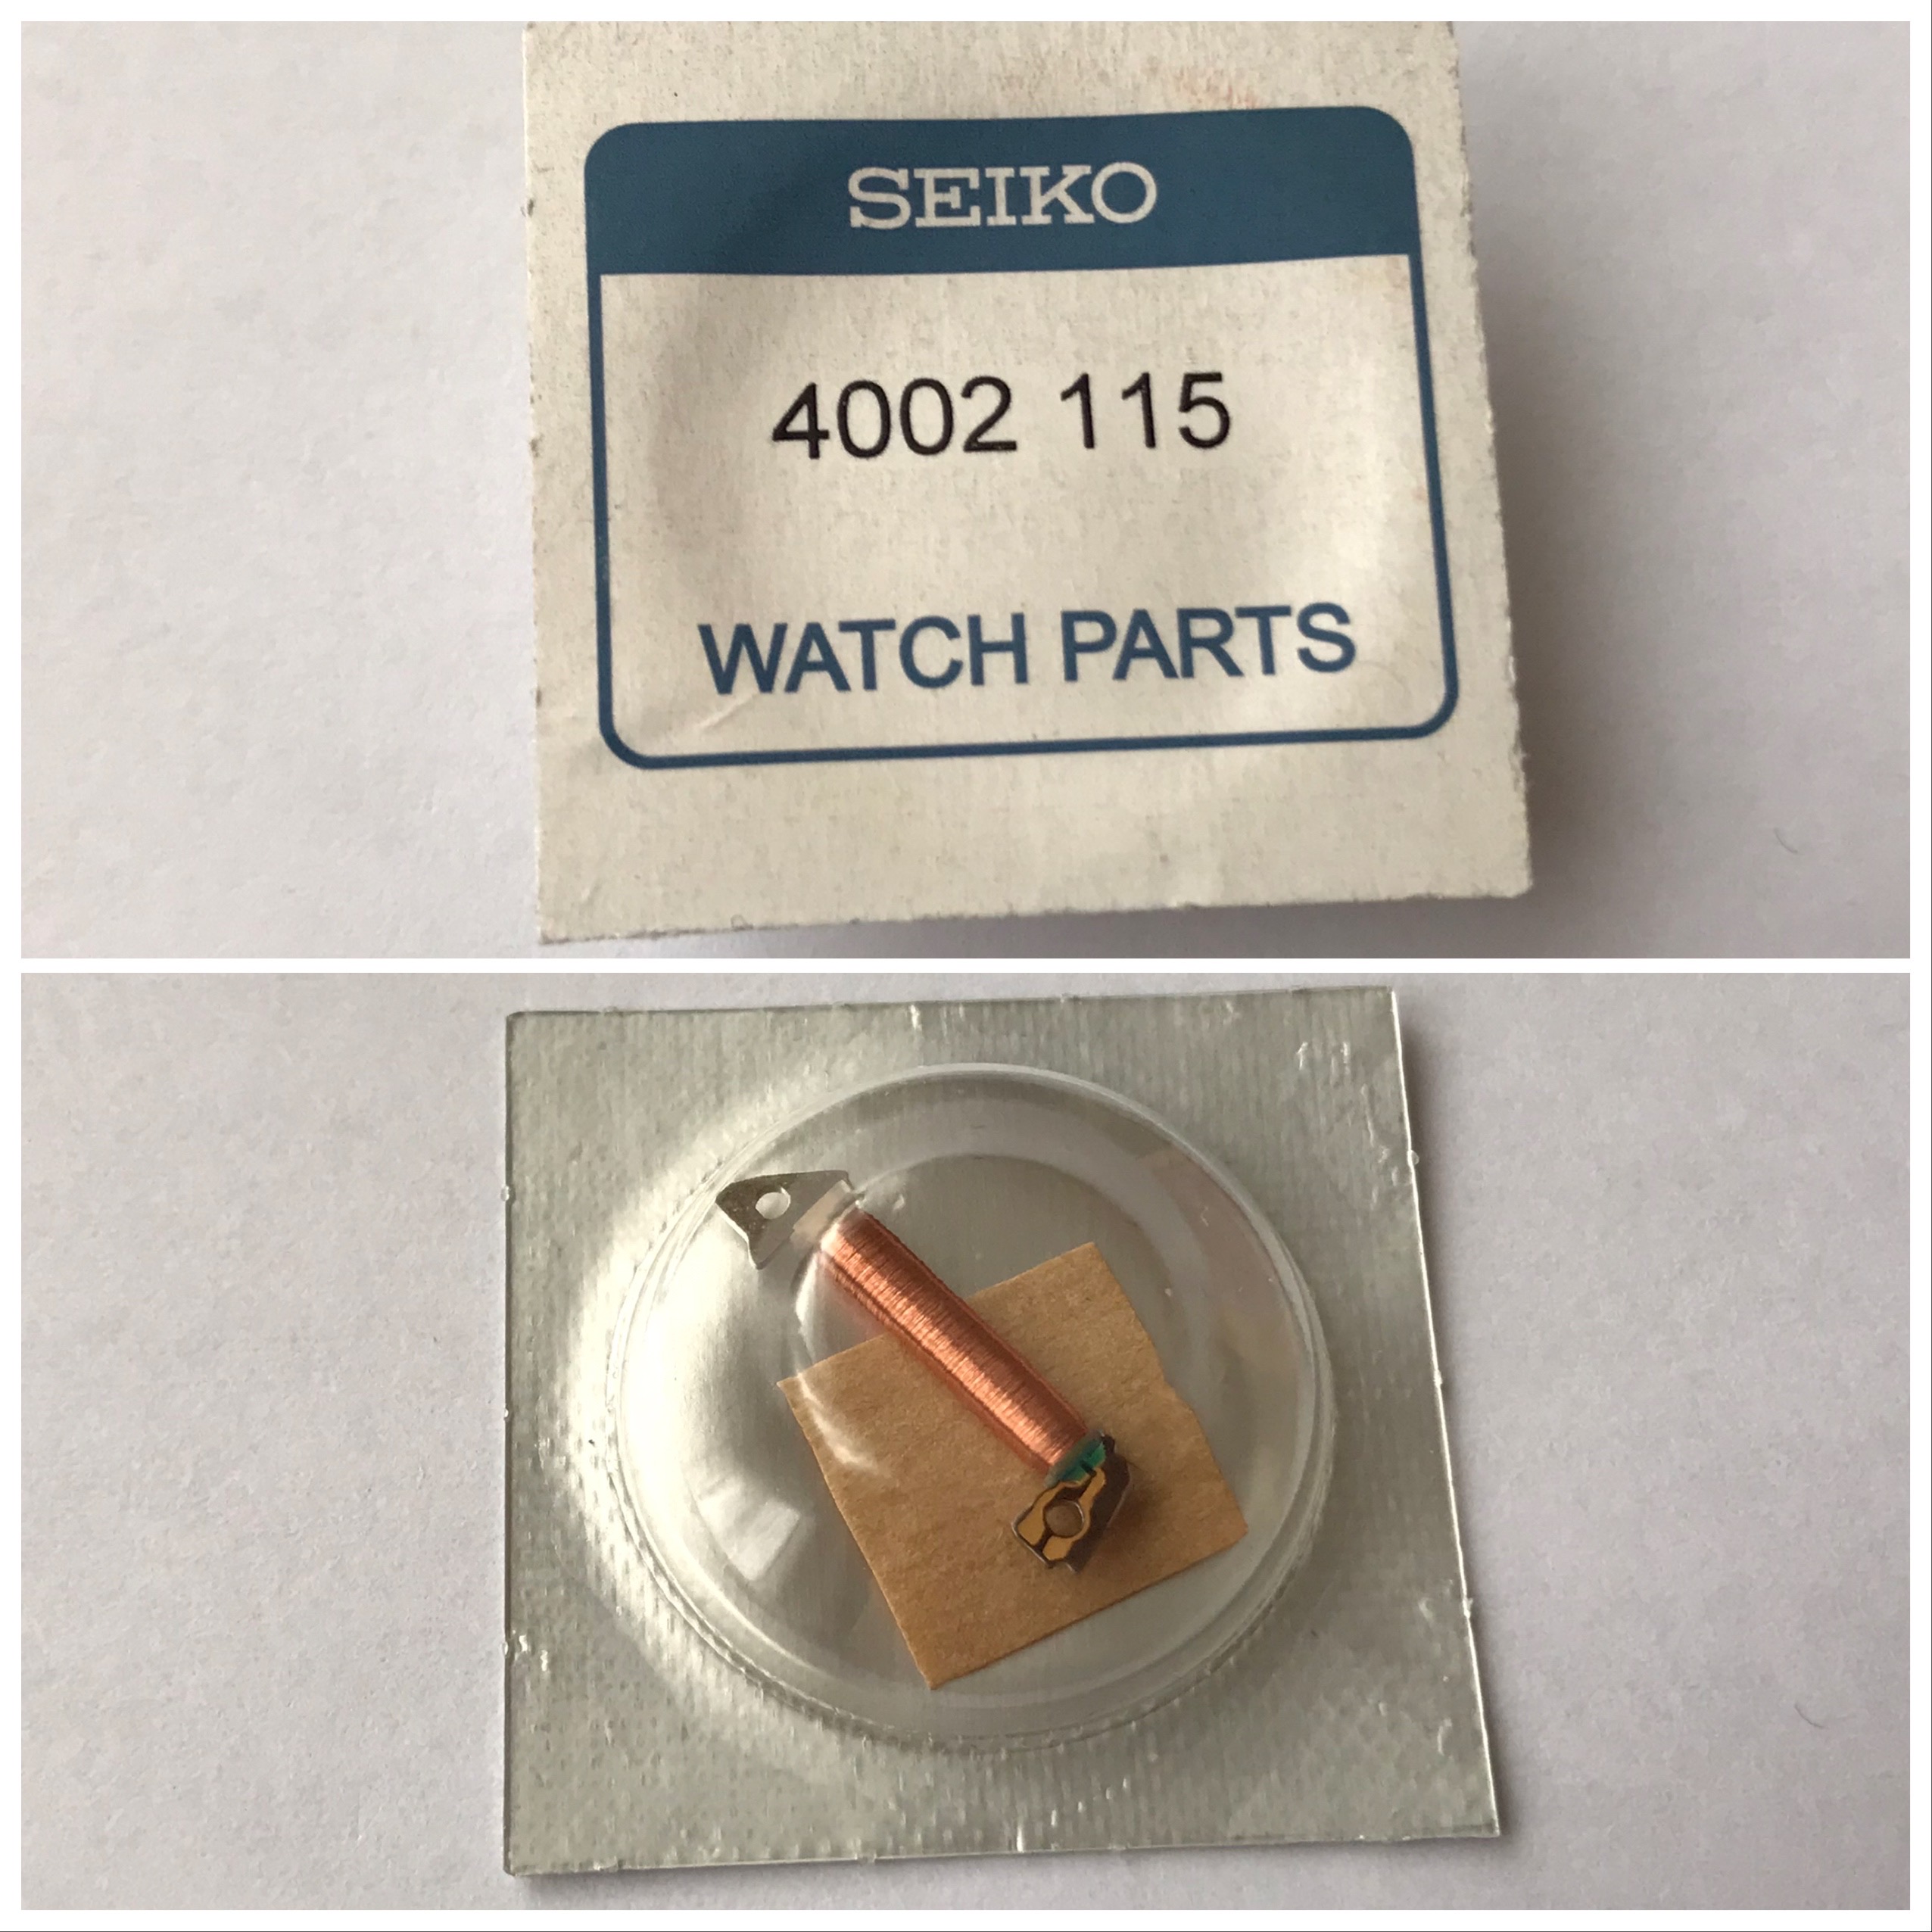 New coil part for Seiko watches 4F32 part 4002-115 - Seiko